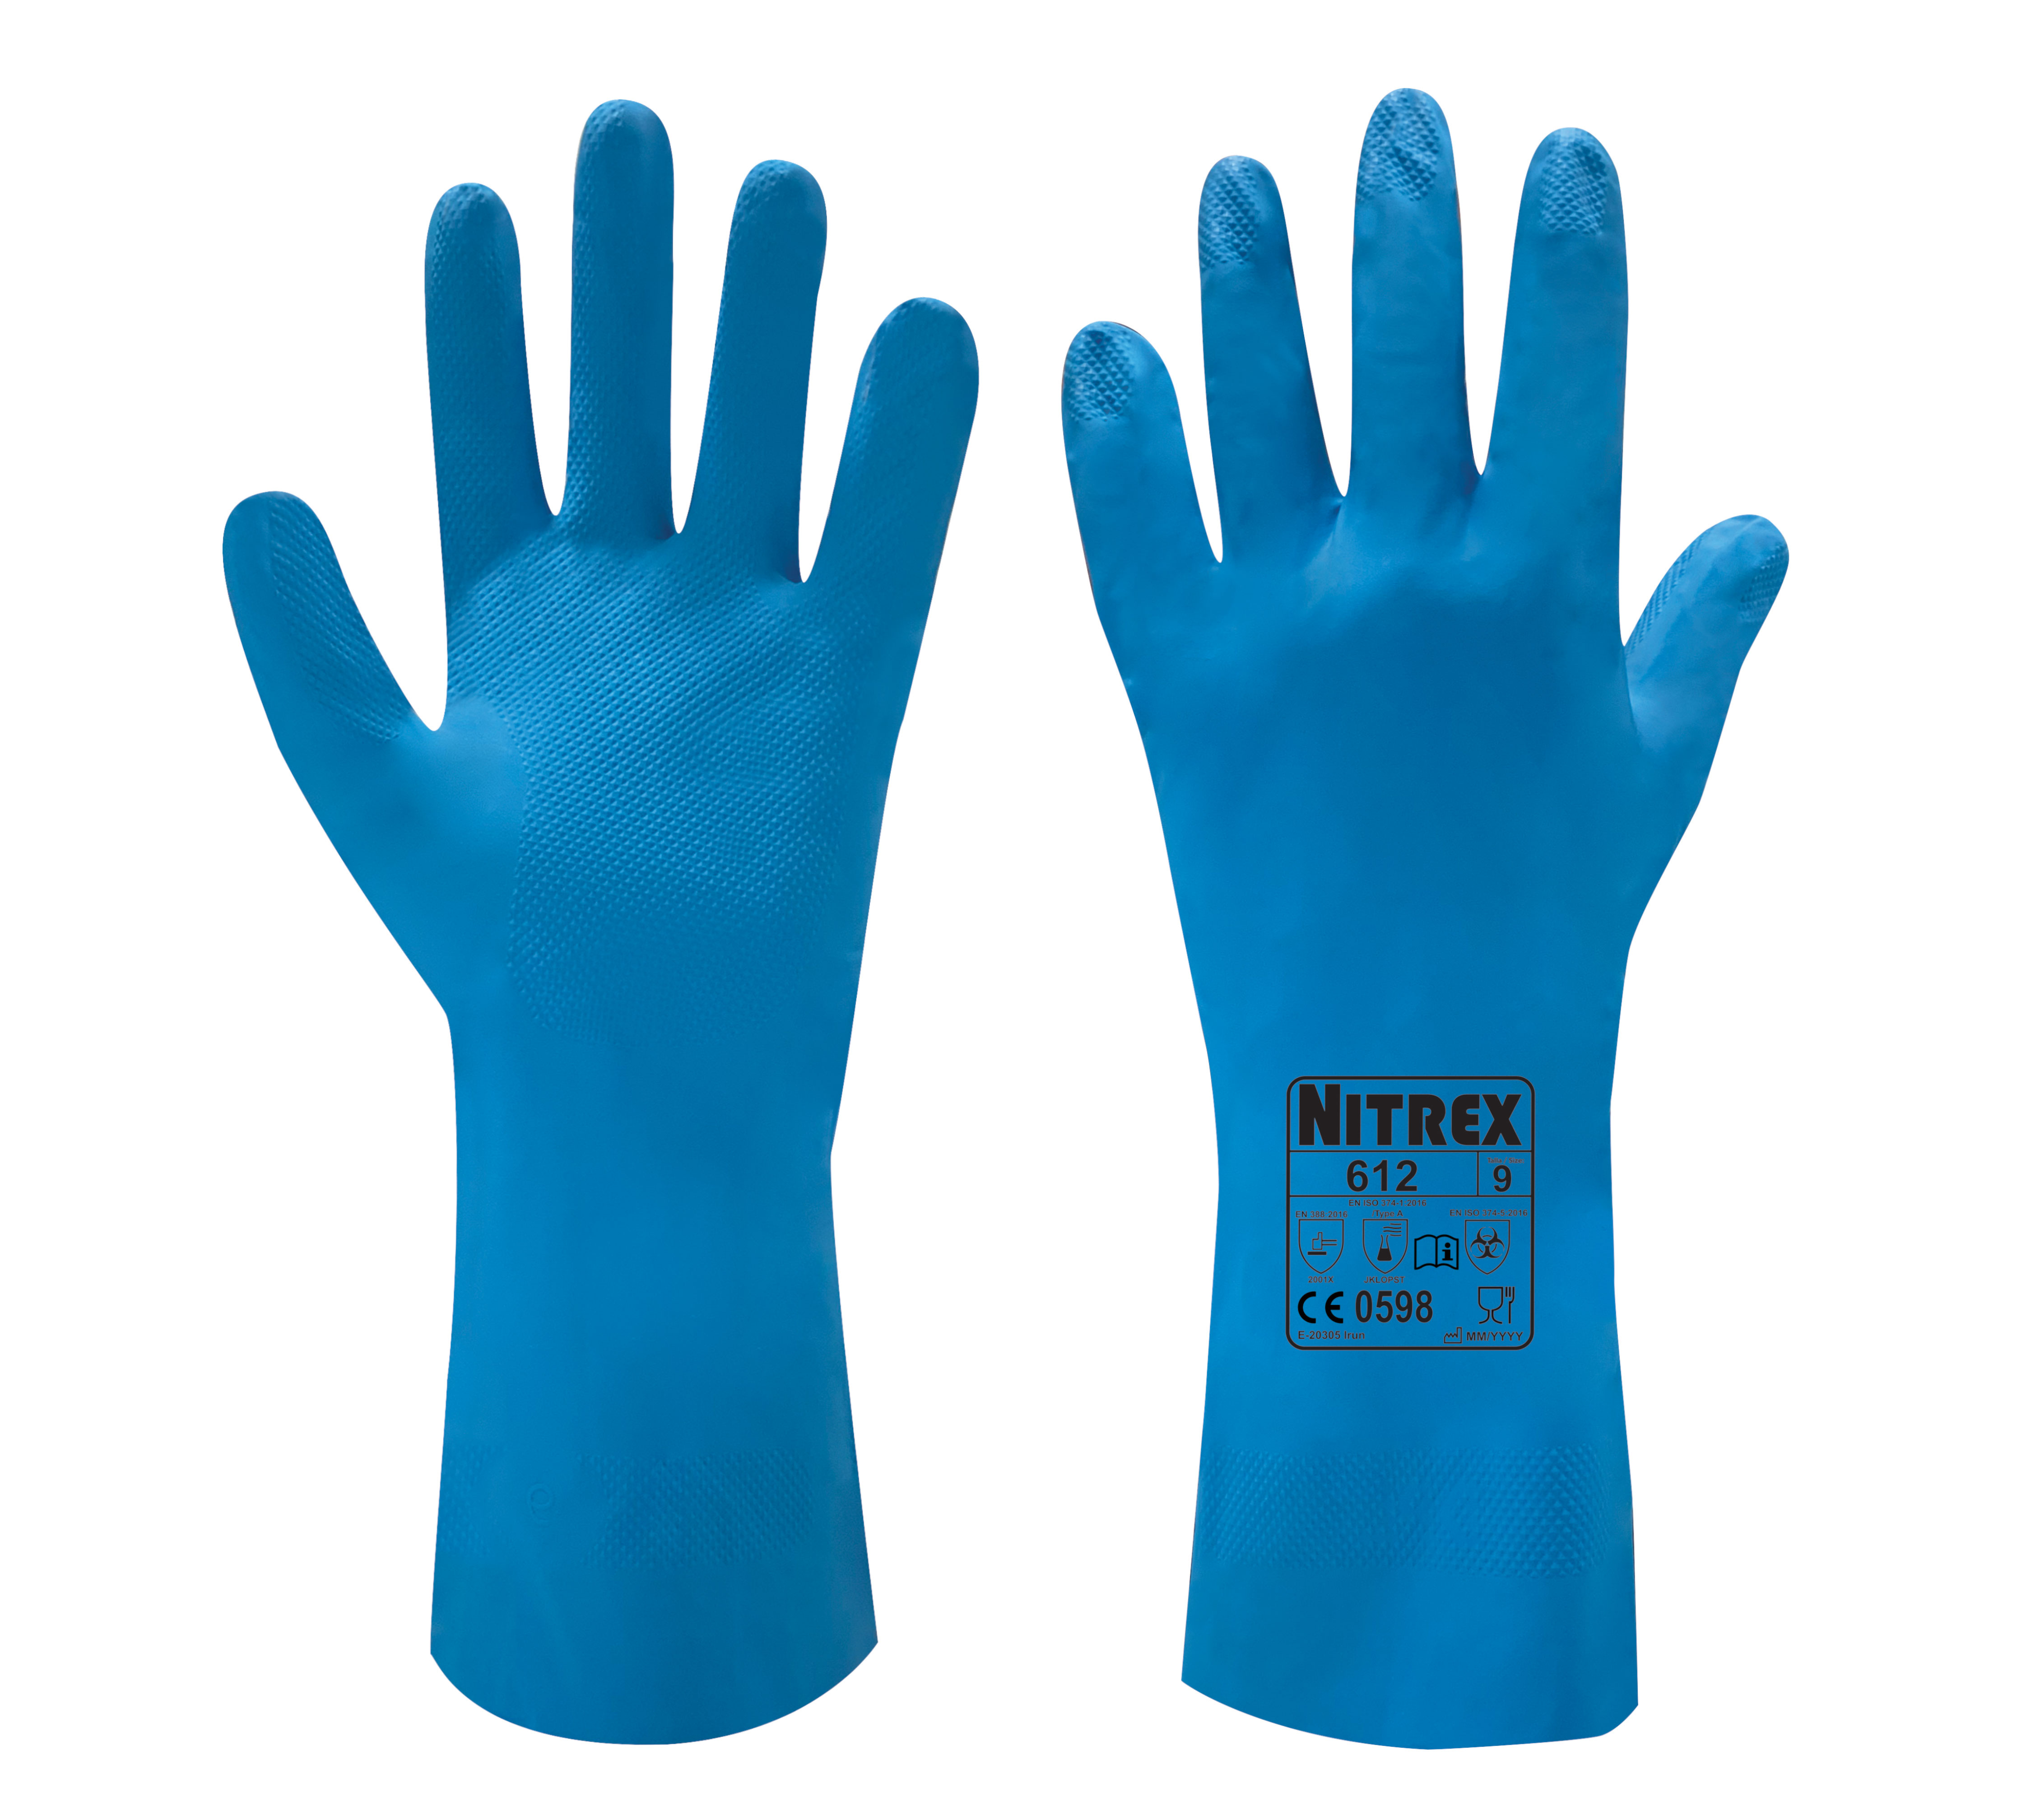 Nitrex 612 - Long Chemical Gauntlet Gloves - Unlined - Food Safe - Abrasion Resistant - Size 6/XS